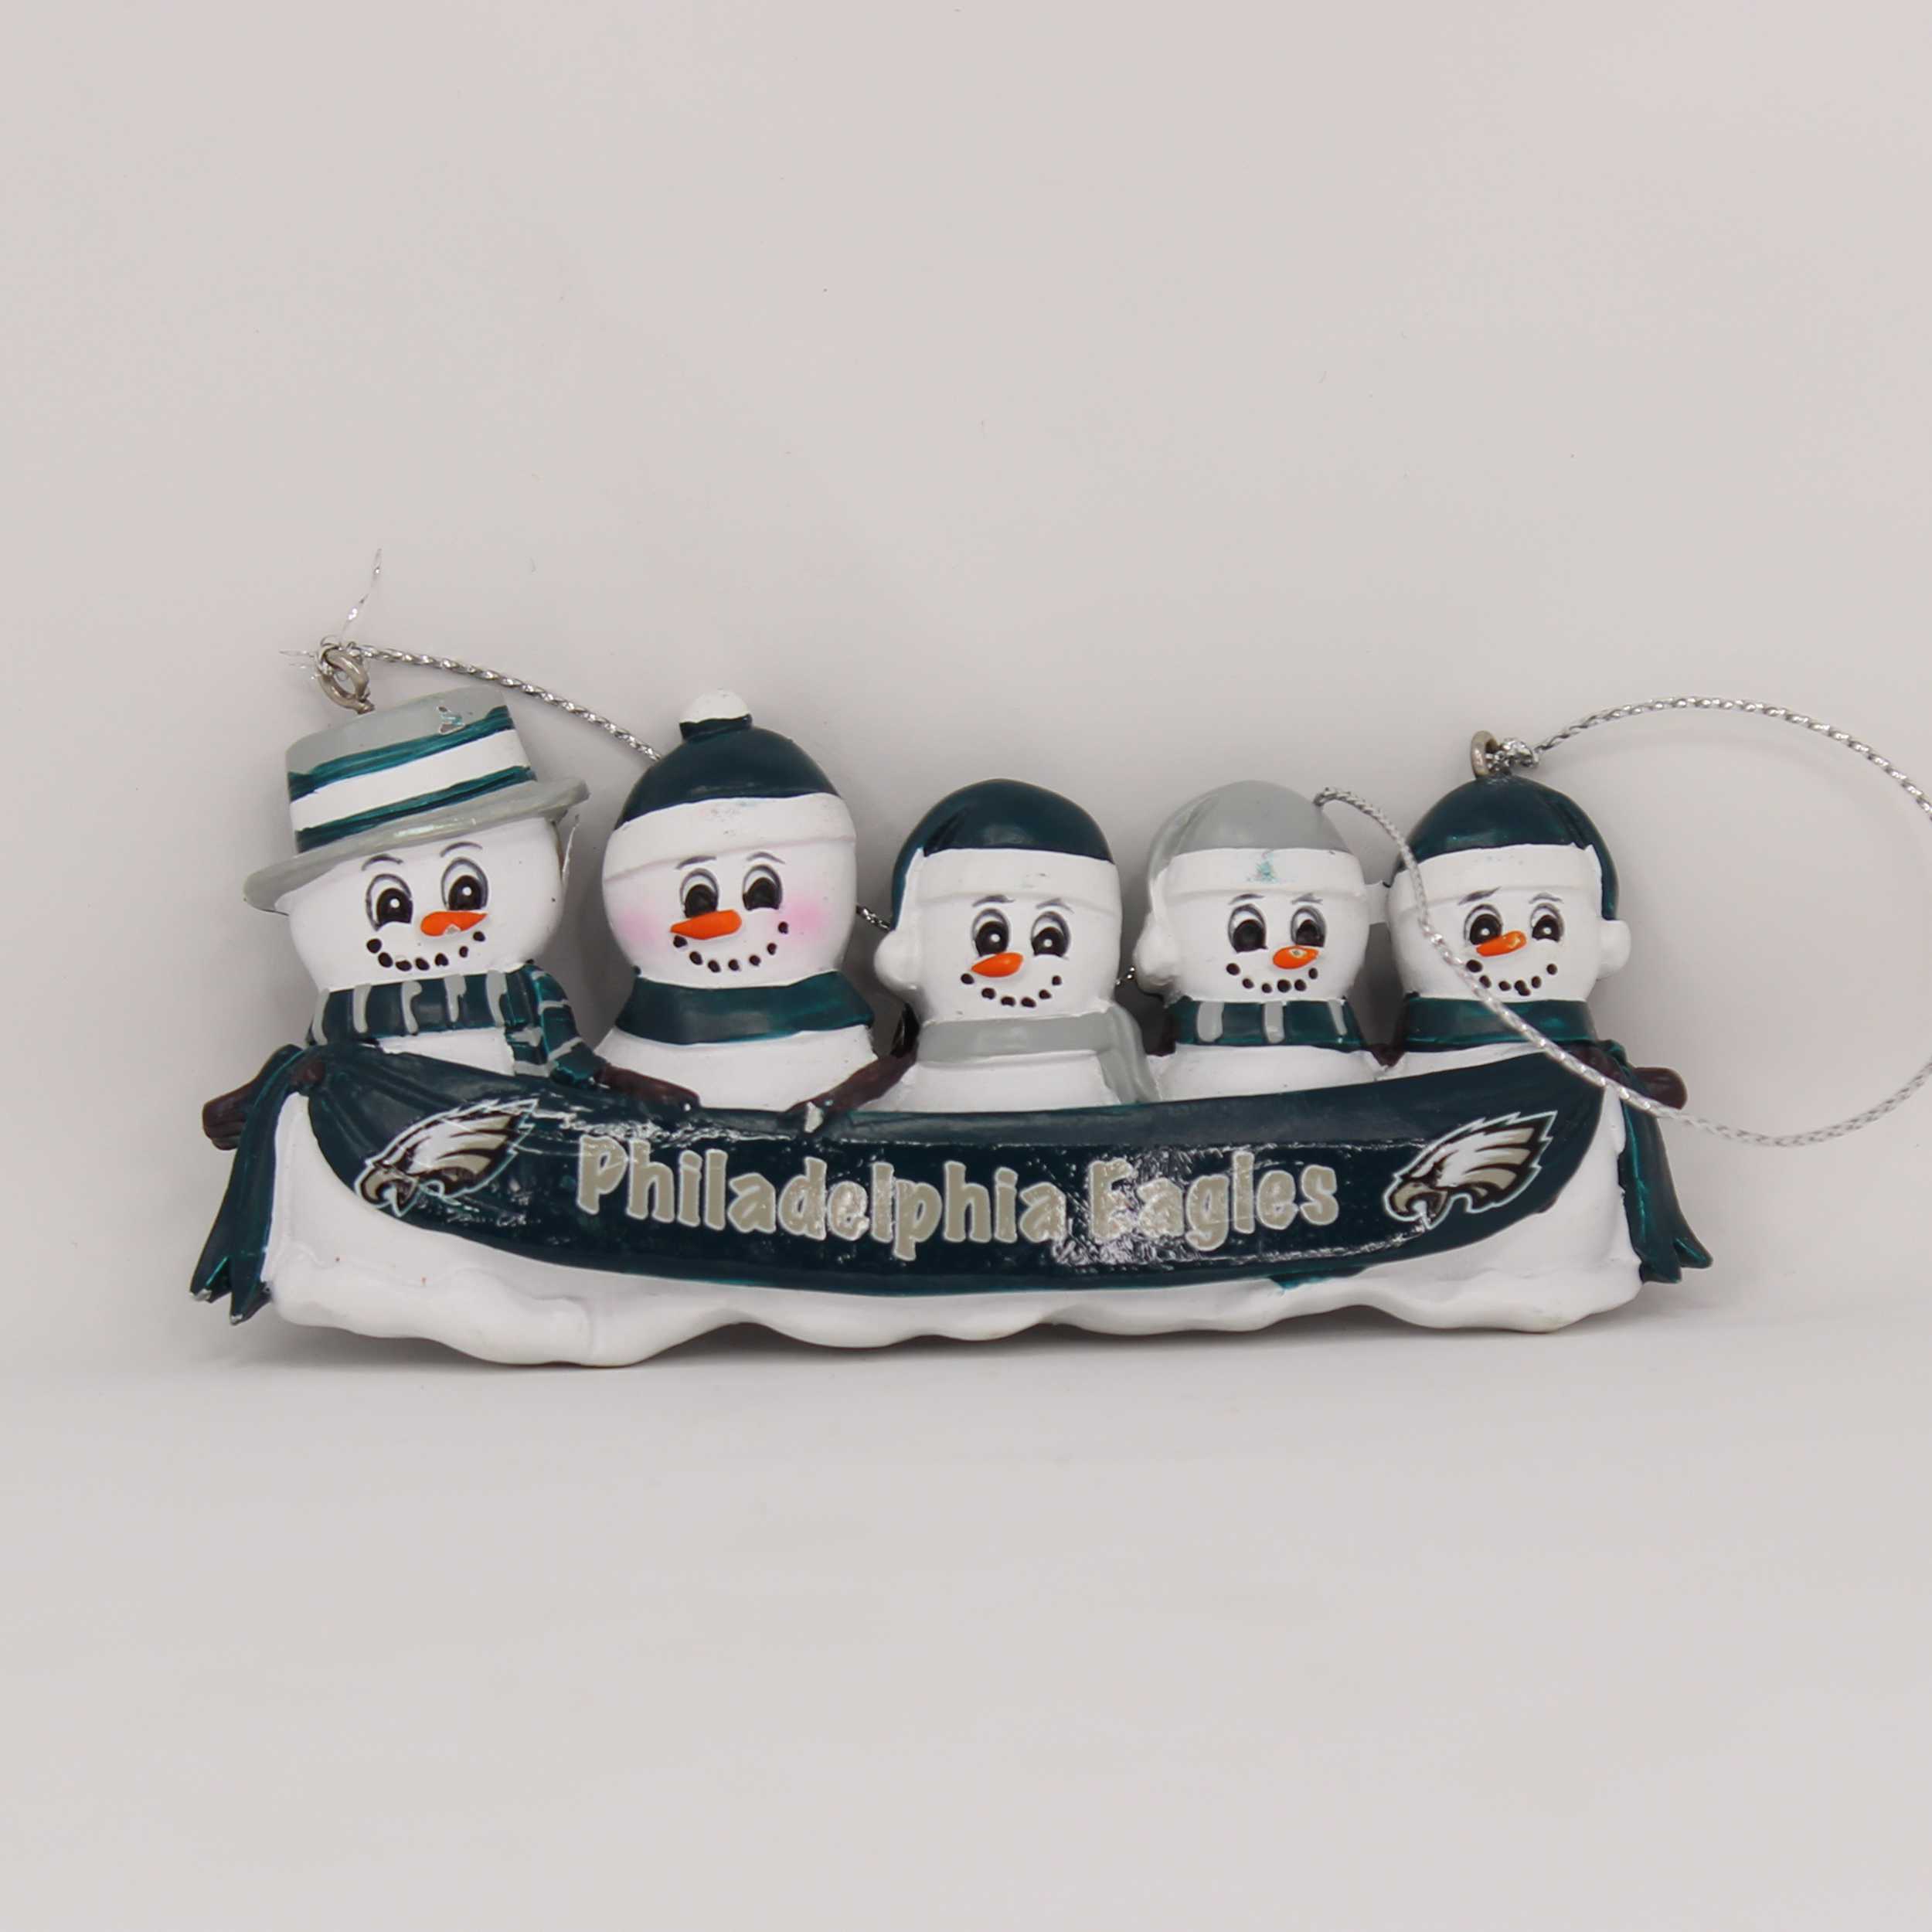 Personalized Family Ornament Philadelphia Eagles